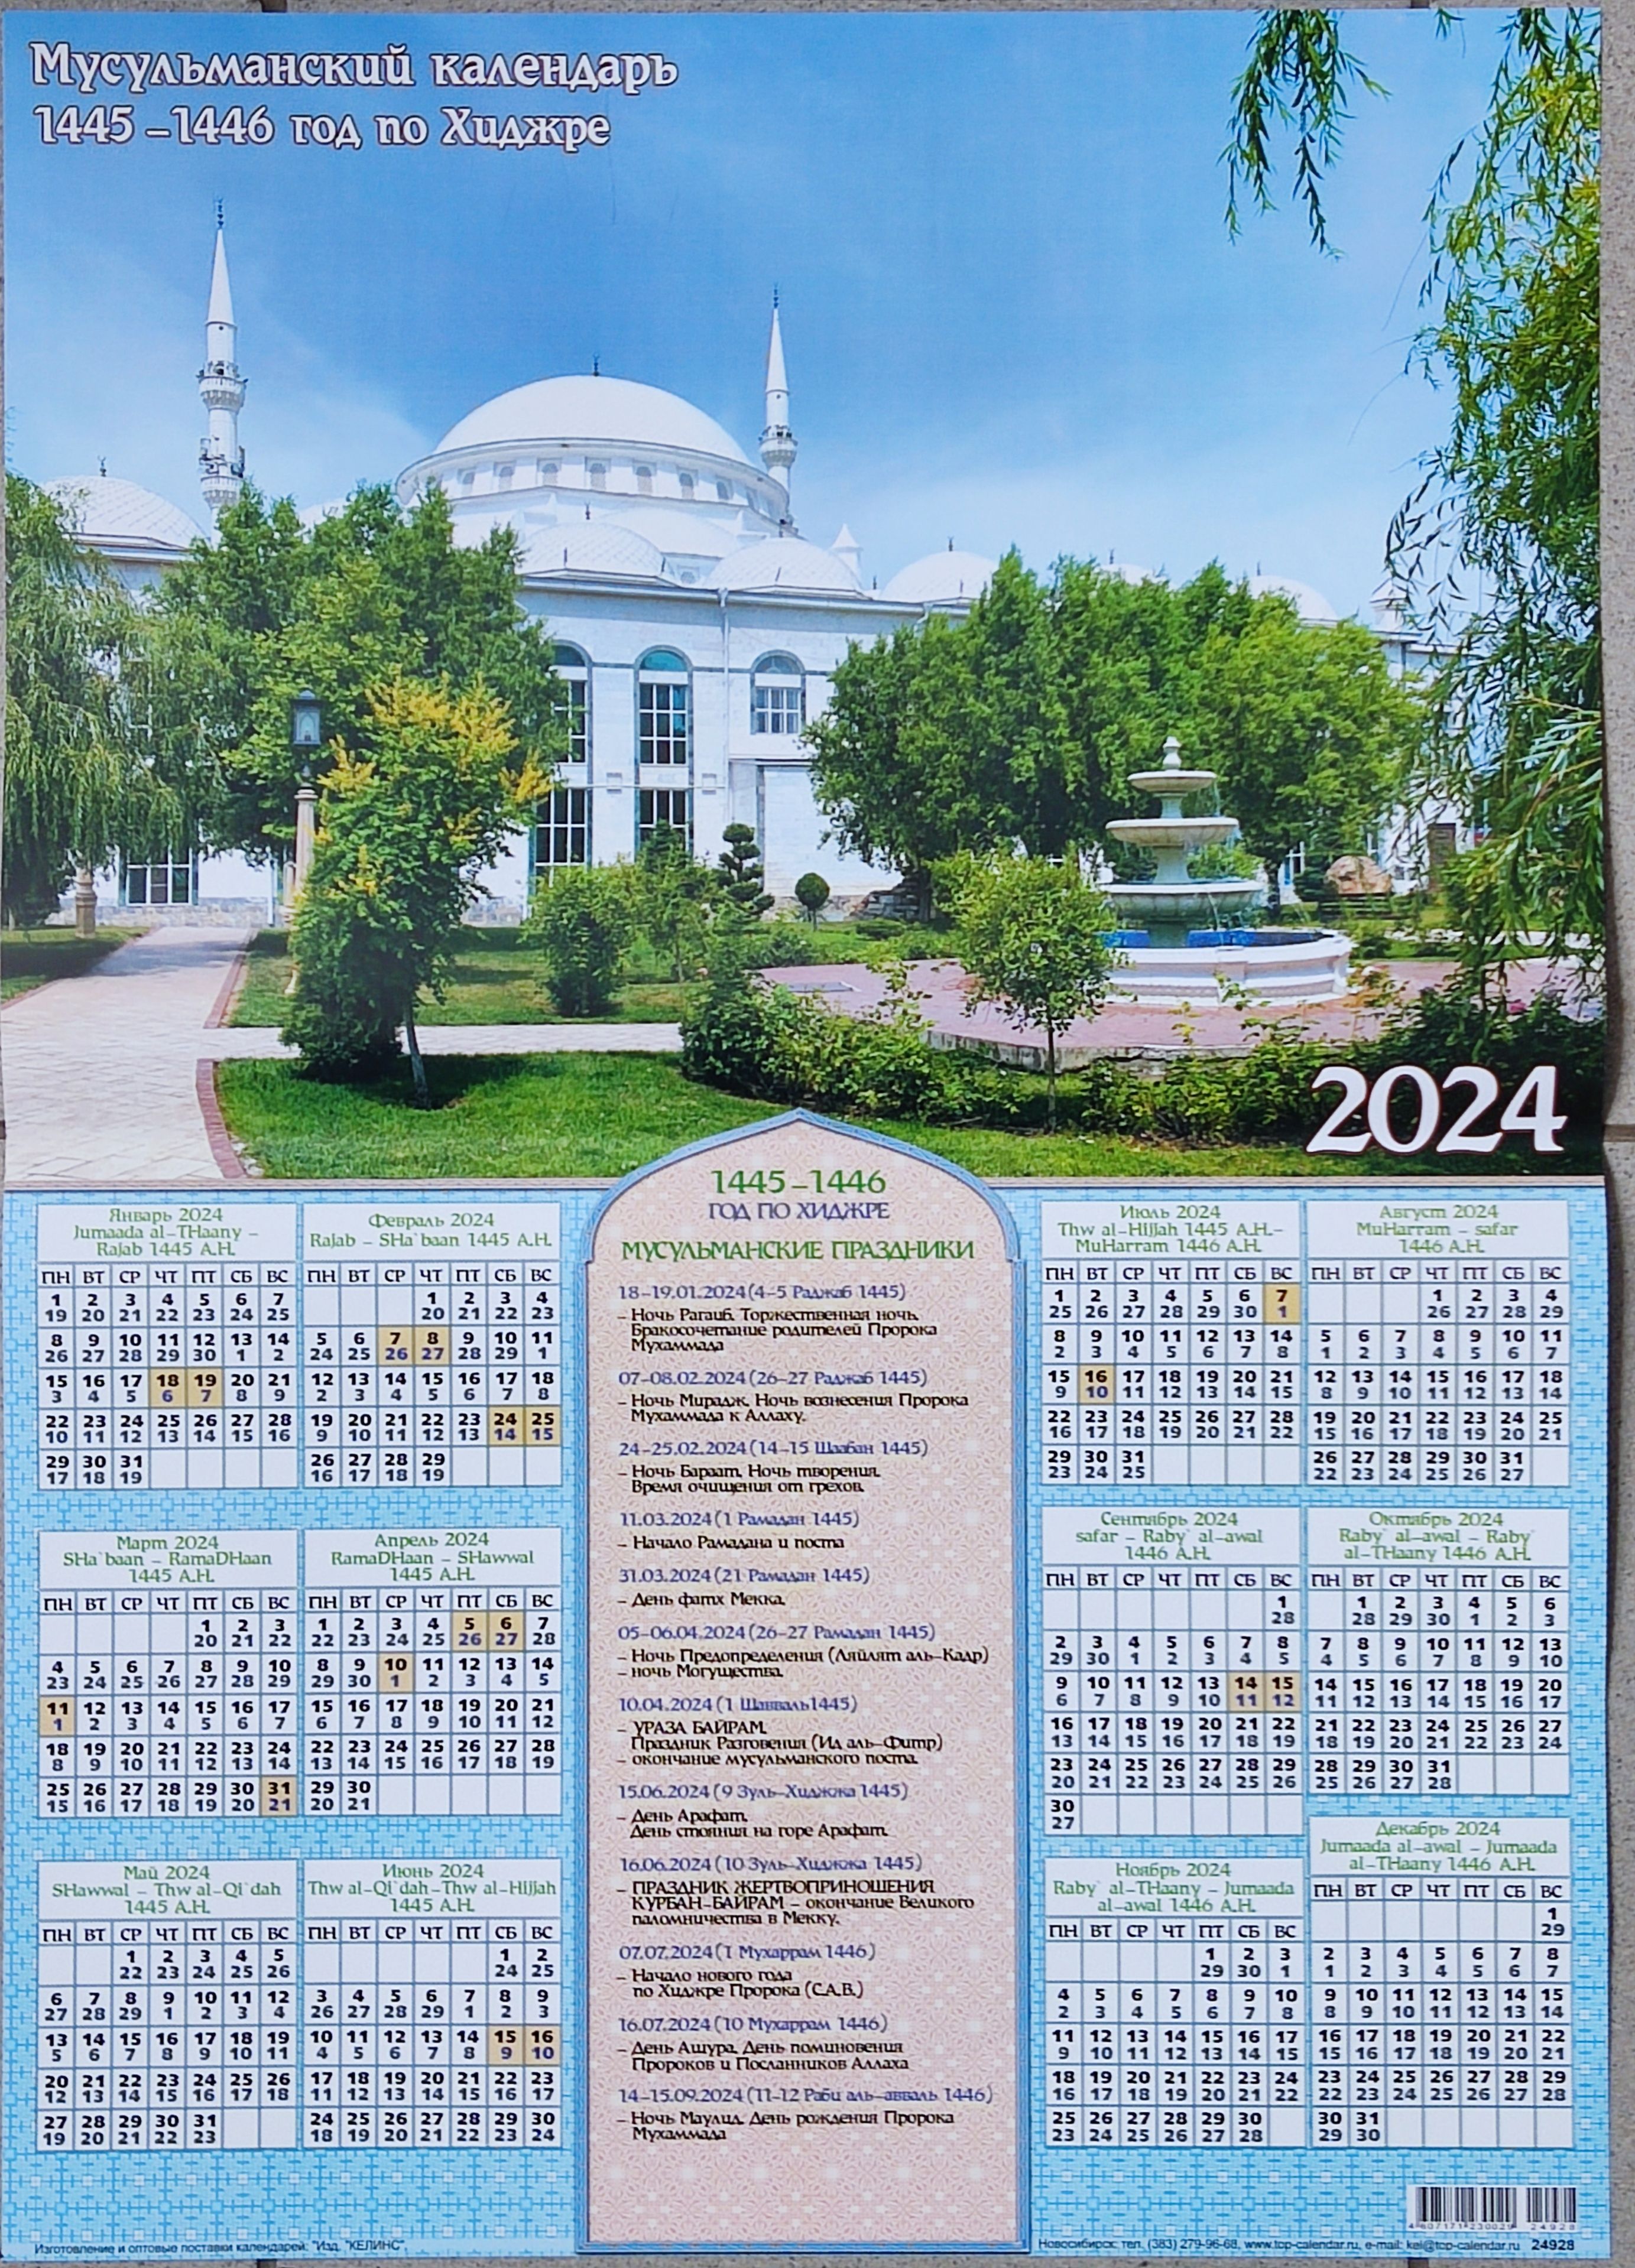 10 апреля 2024 у мусульман. Исламский календарь. Мусульманский календарь. Мусульманский календарь 2023. Календарь исламский календарь.